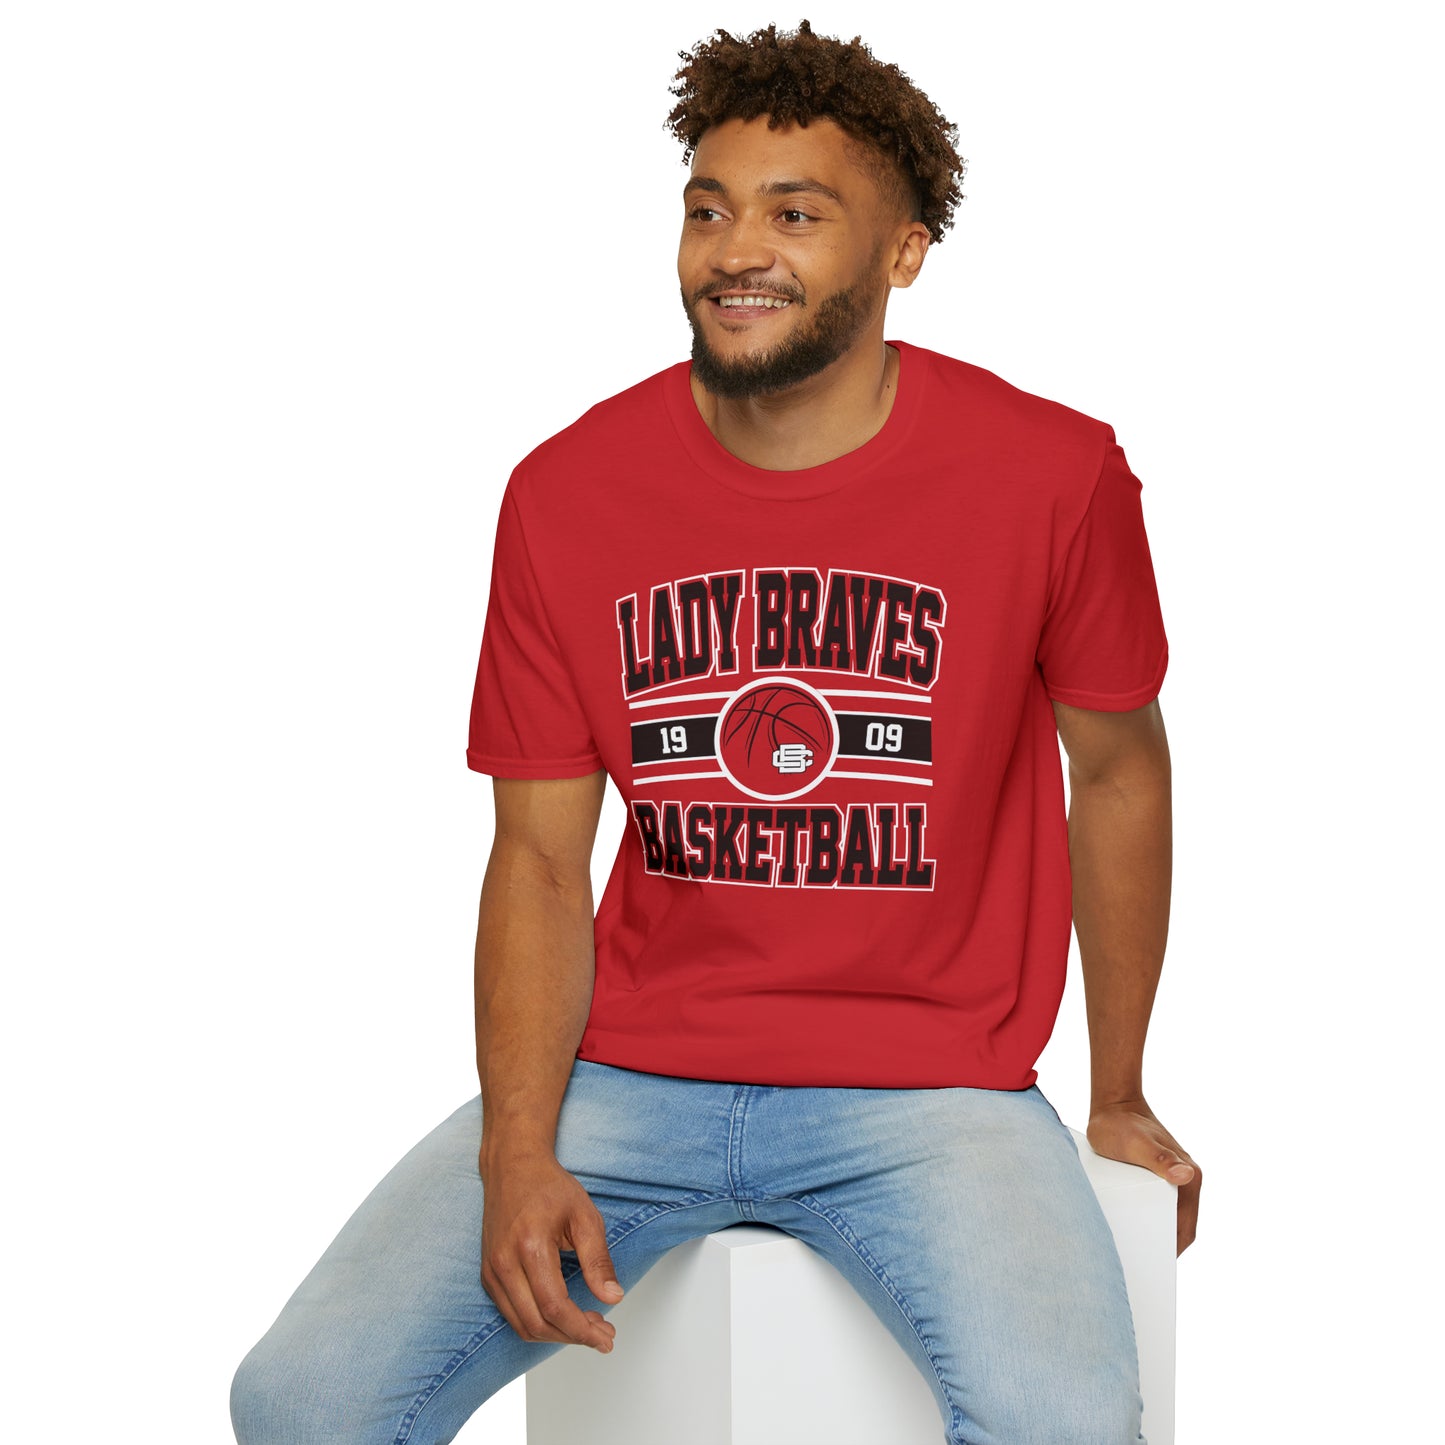 Lady Braves Basketball Unisex Softstyle T-Shirt